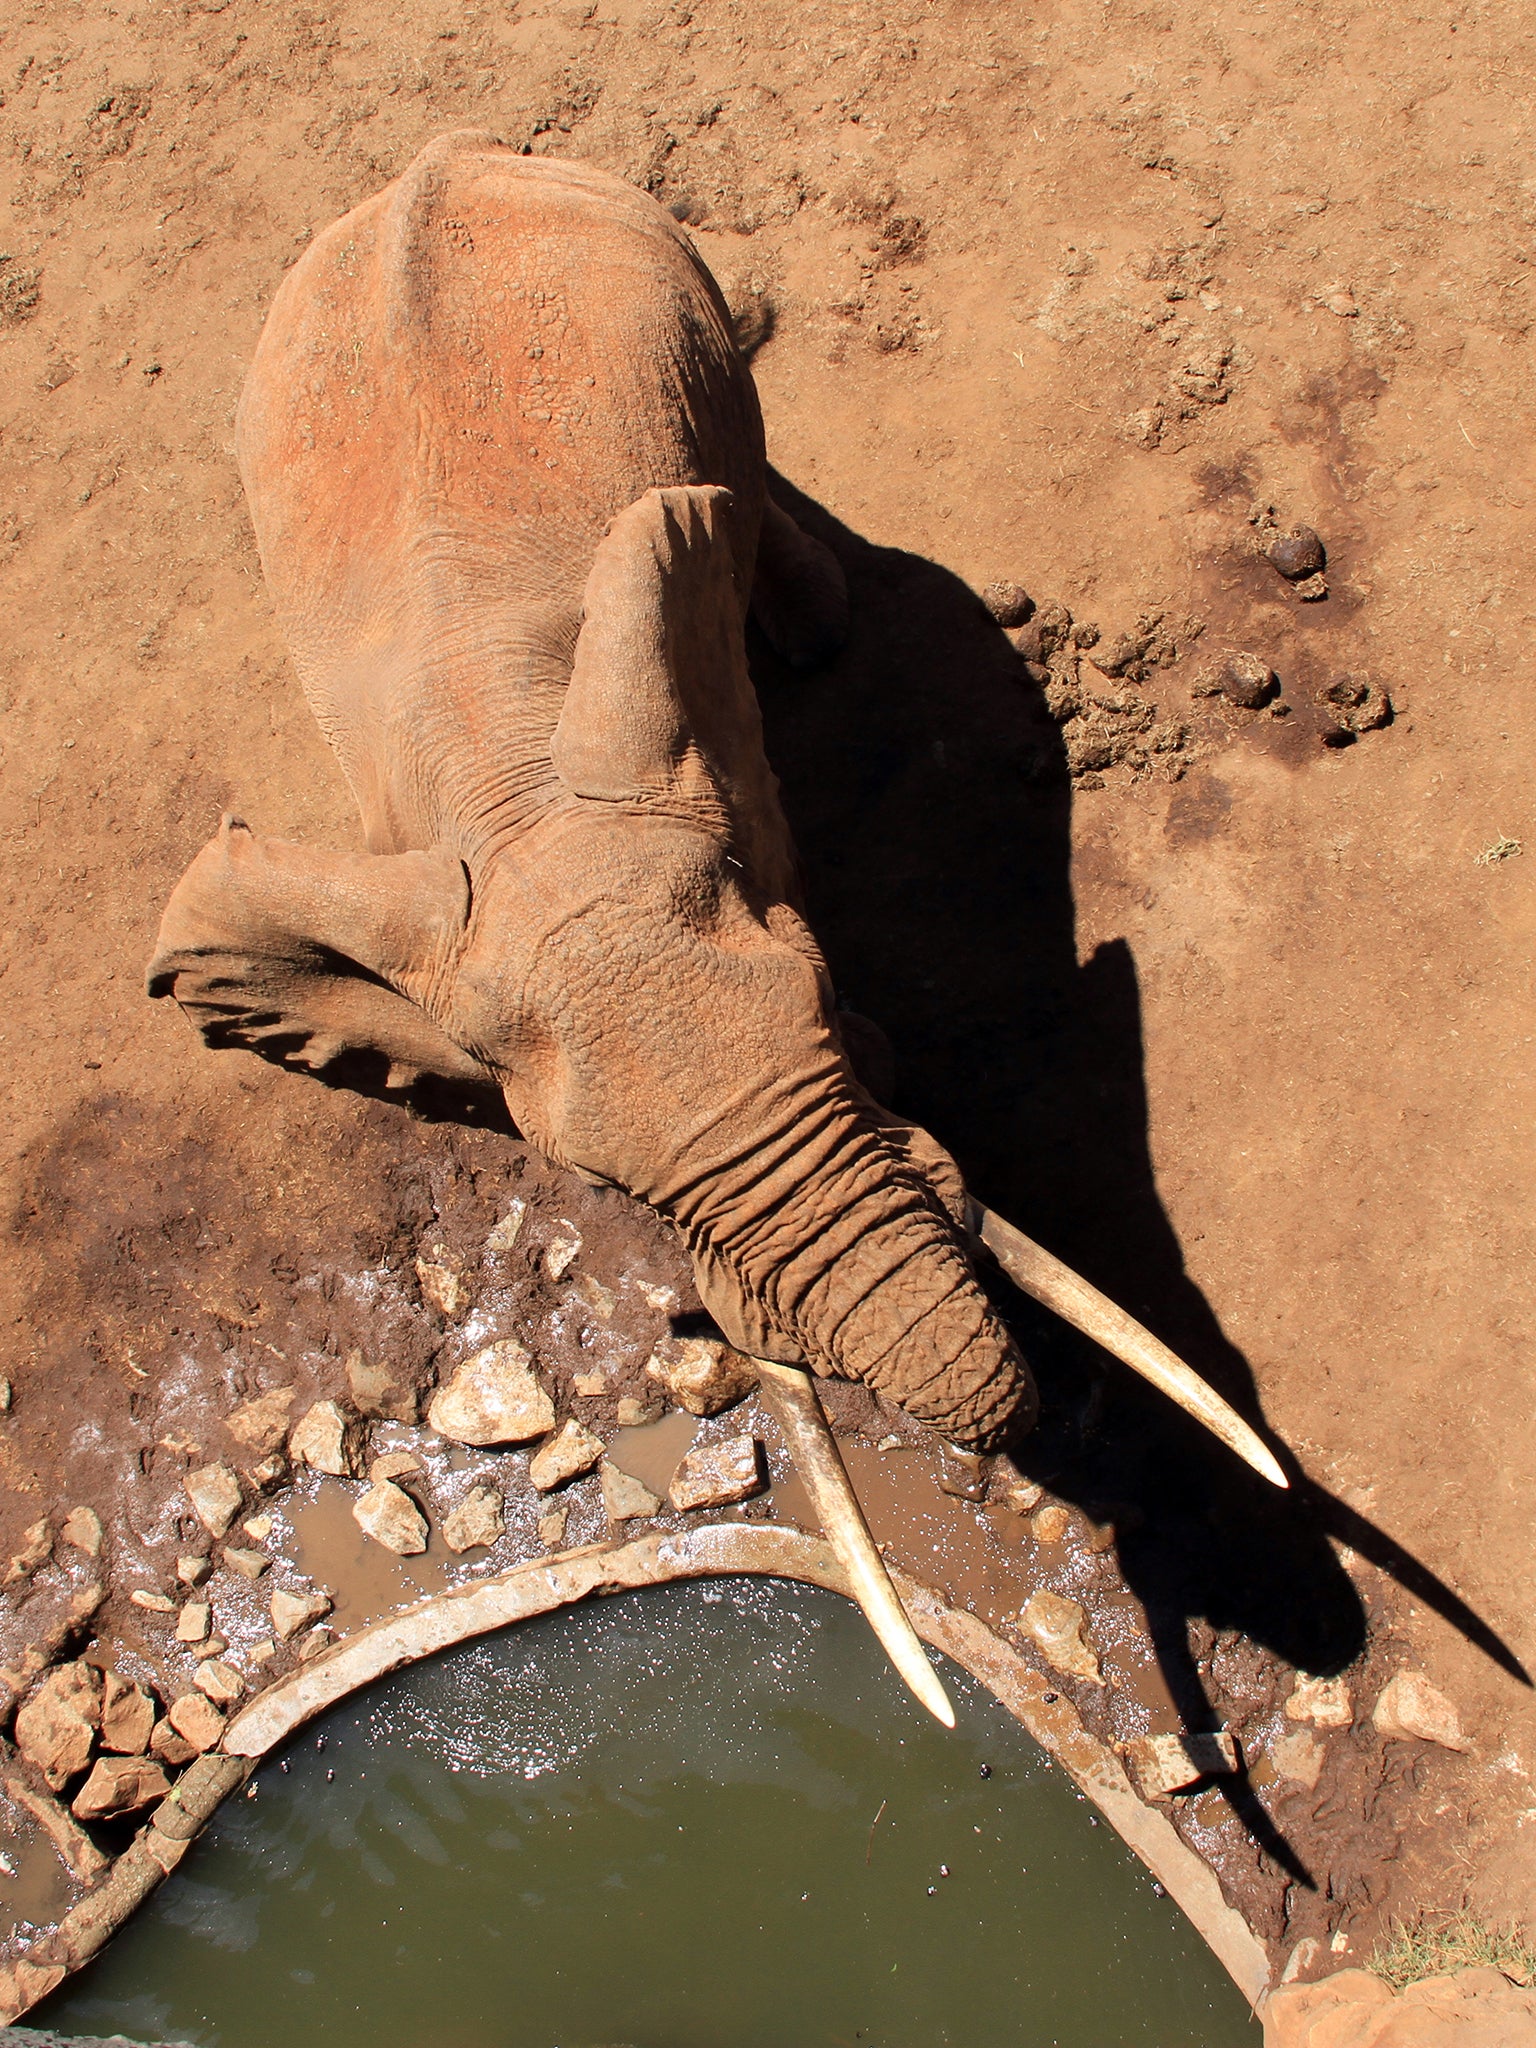 Elephants are drawn to the moat around the Sarova Salt Lick Game Lodge